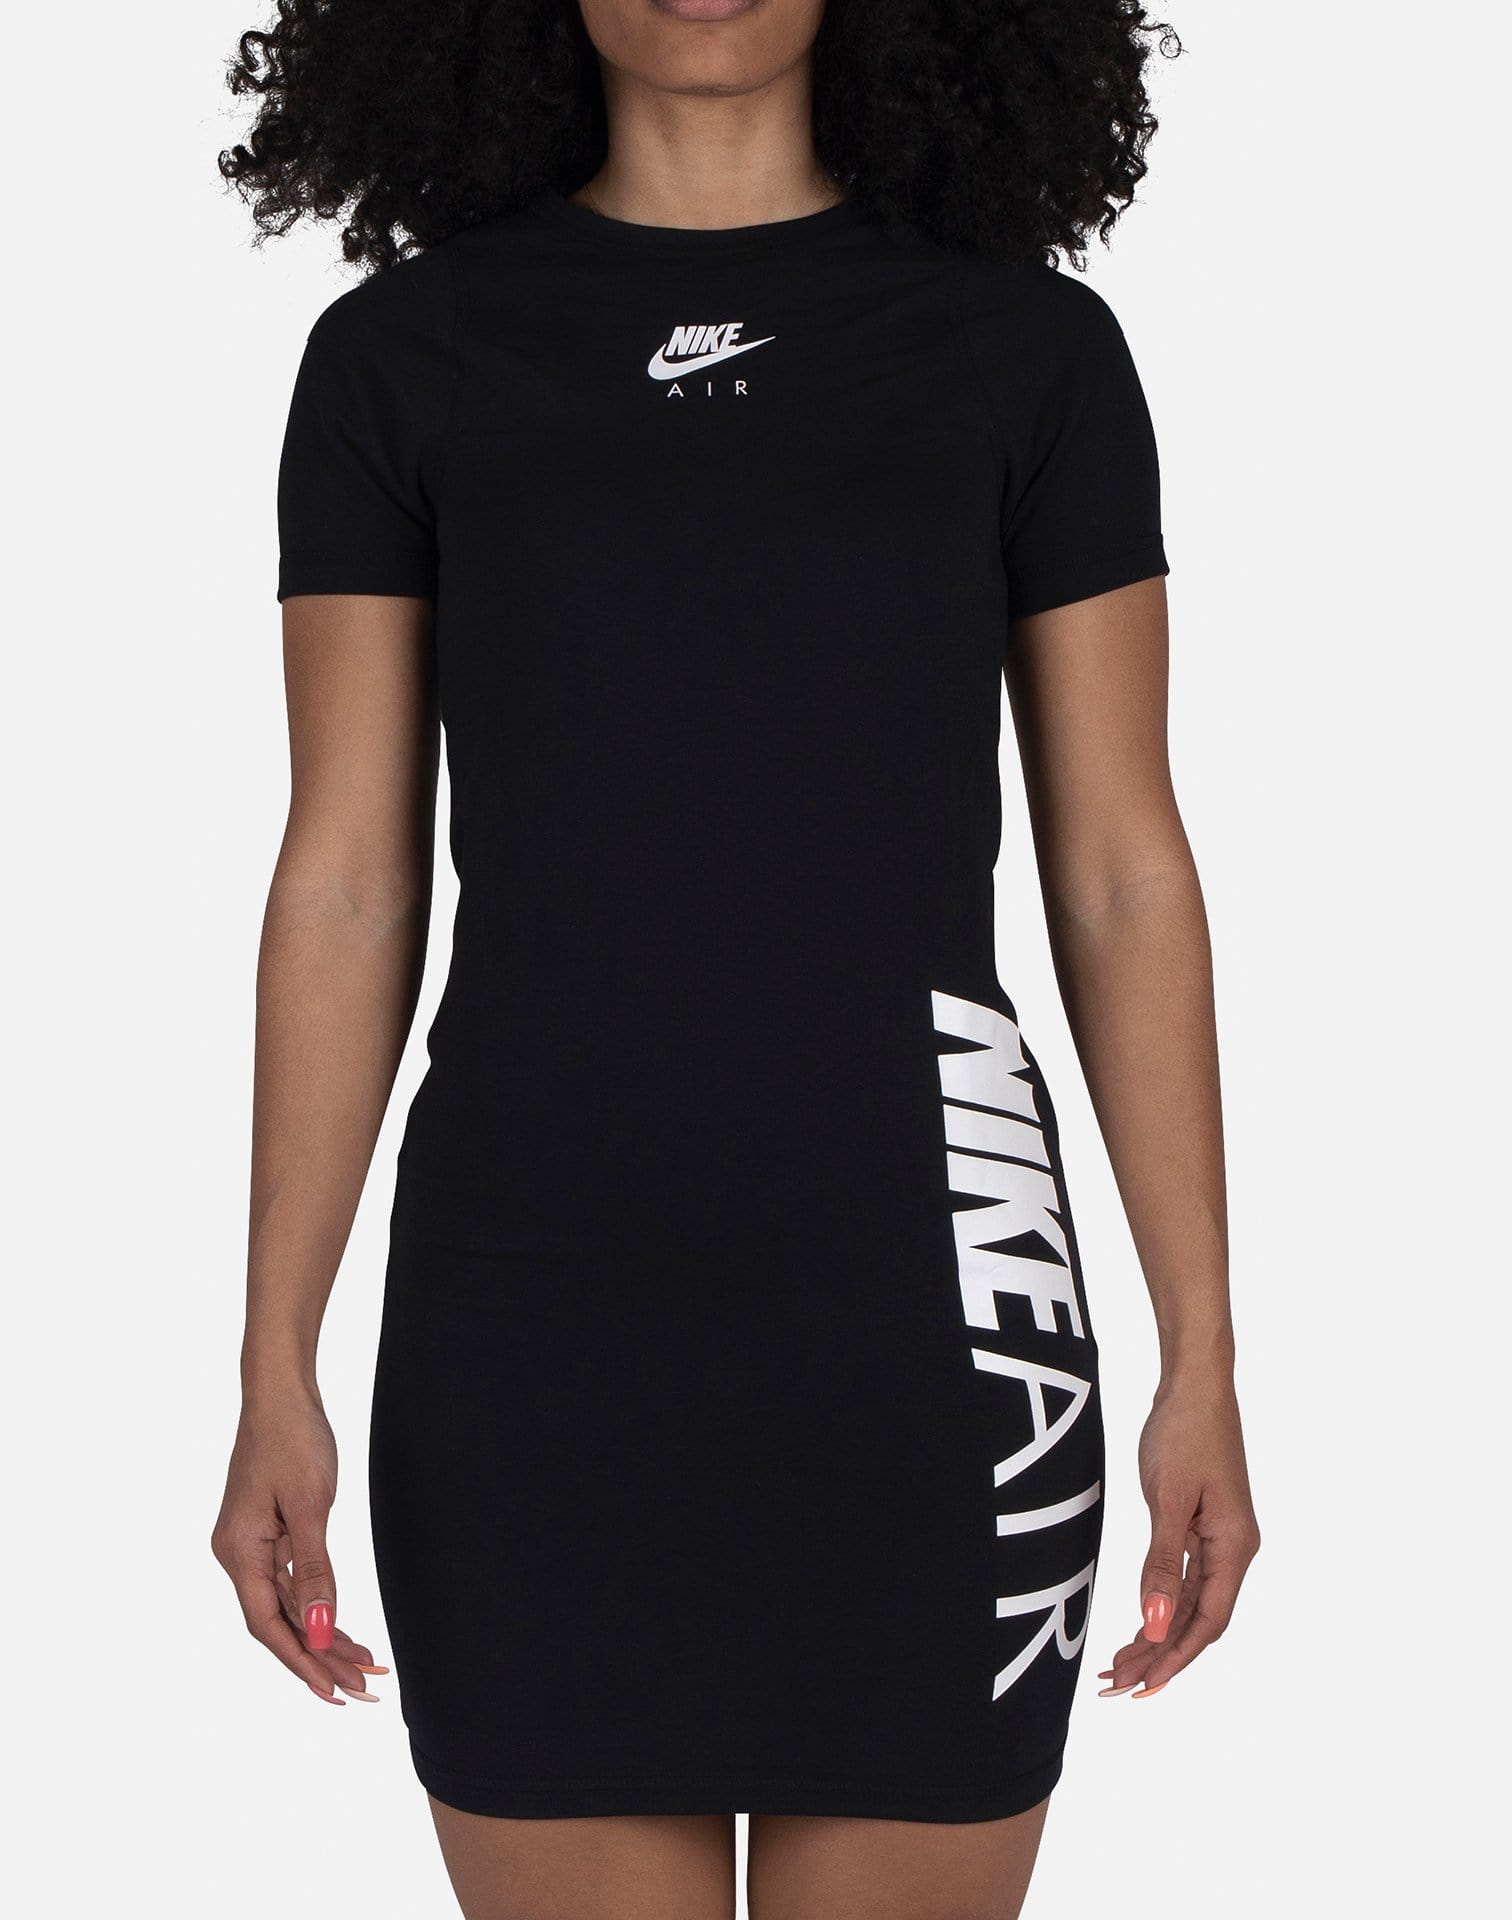 Nike Women's Air Dress